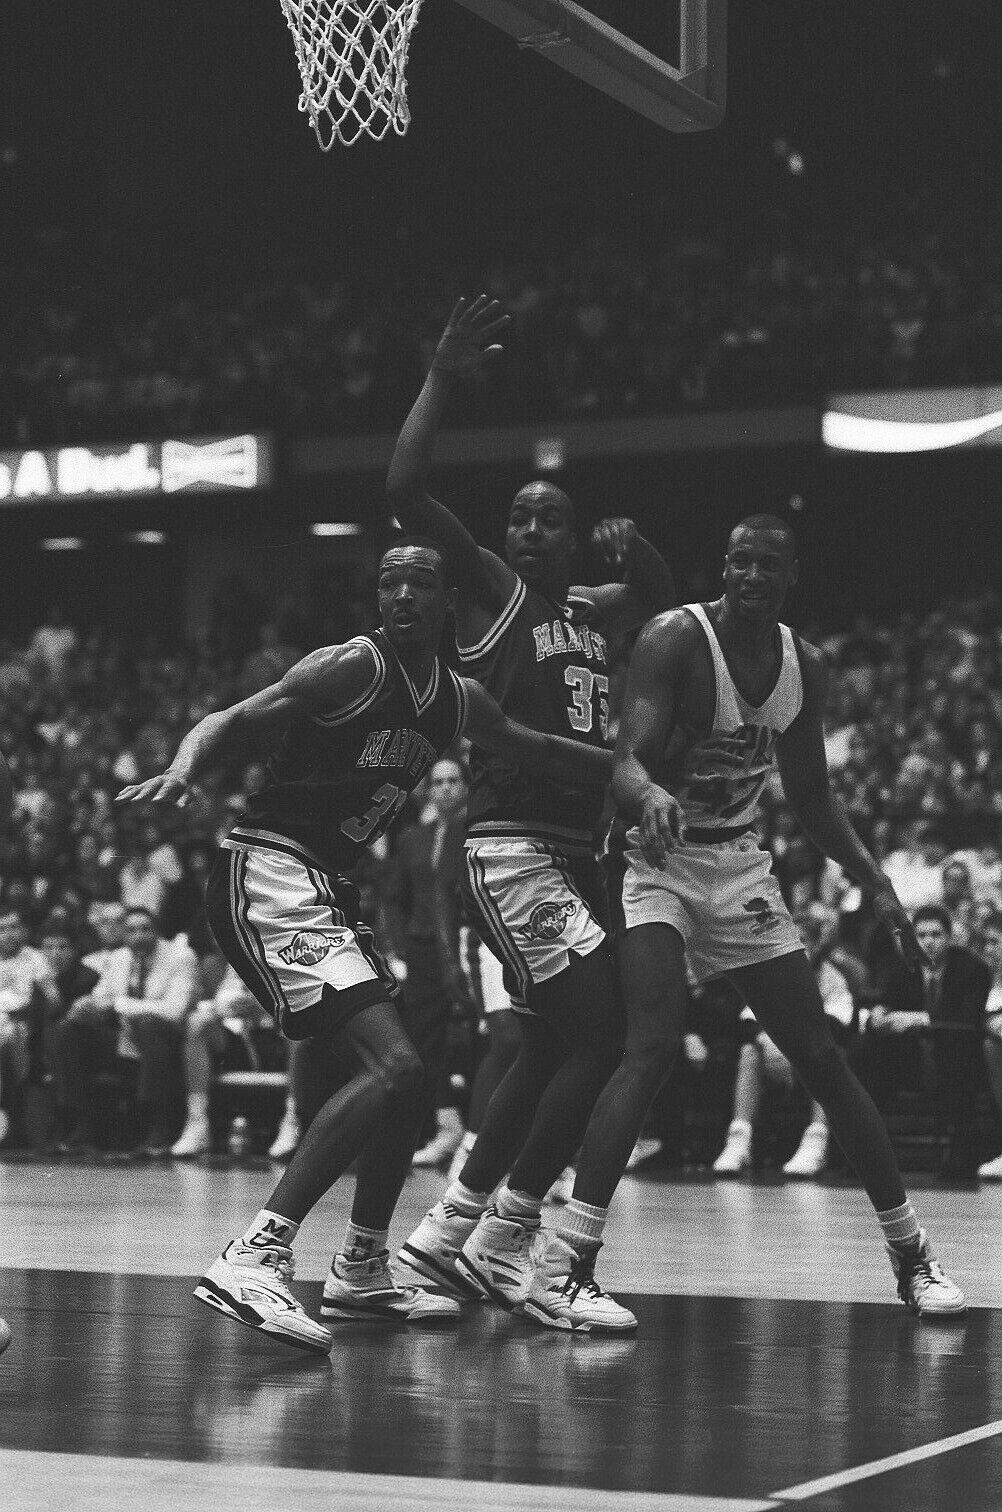 LD126-15 1992 College Basketball DePaul Marquette (140) ORIG 35mm B&W NEGATIVES Без бренда - фотография #8